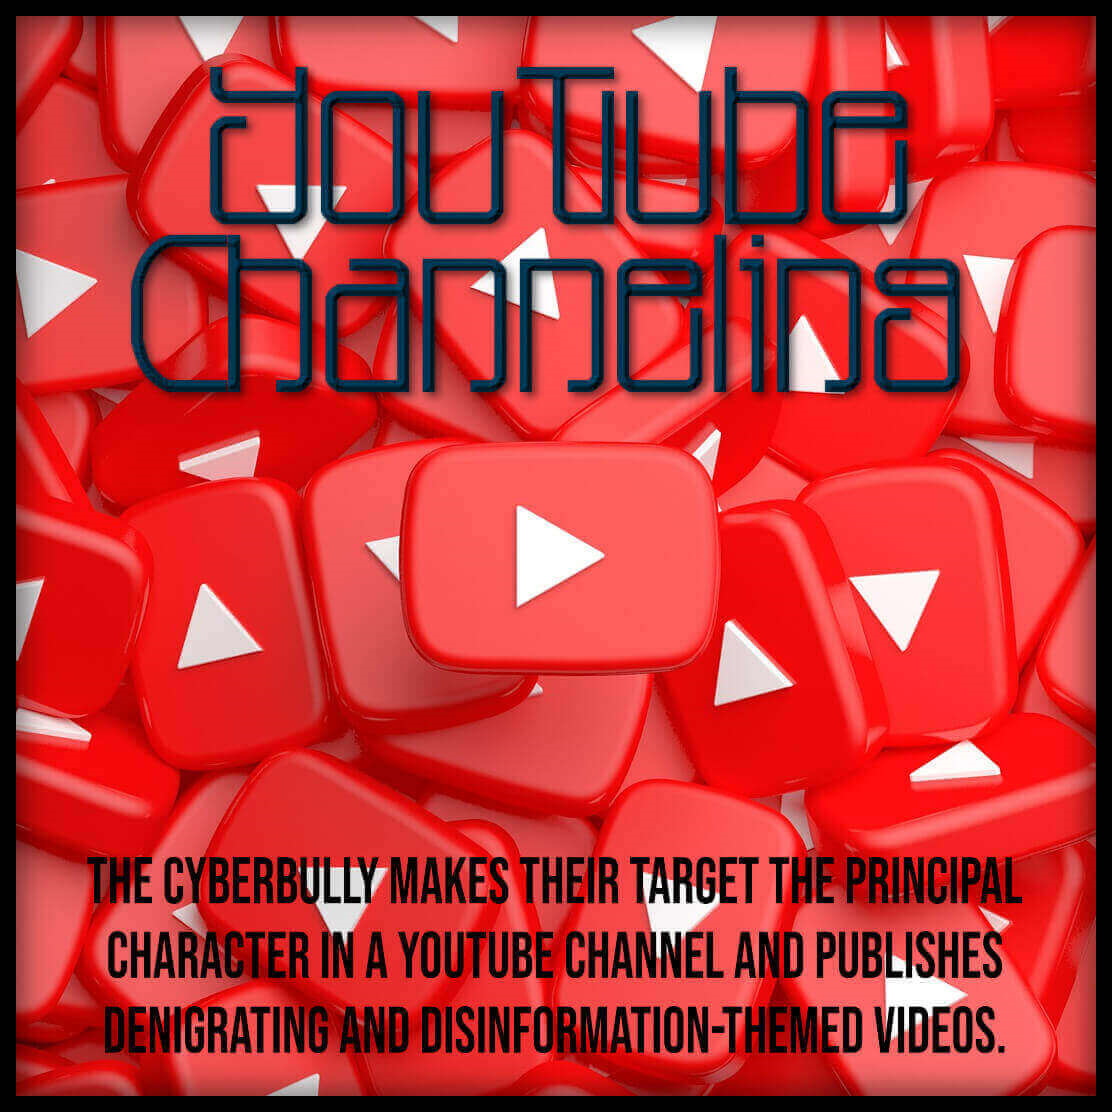 michael-nuccitelli-cyberbullying-youtube-channeling